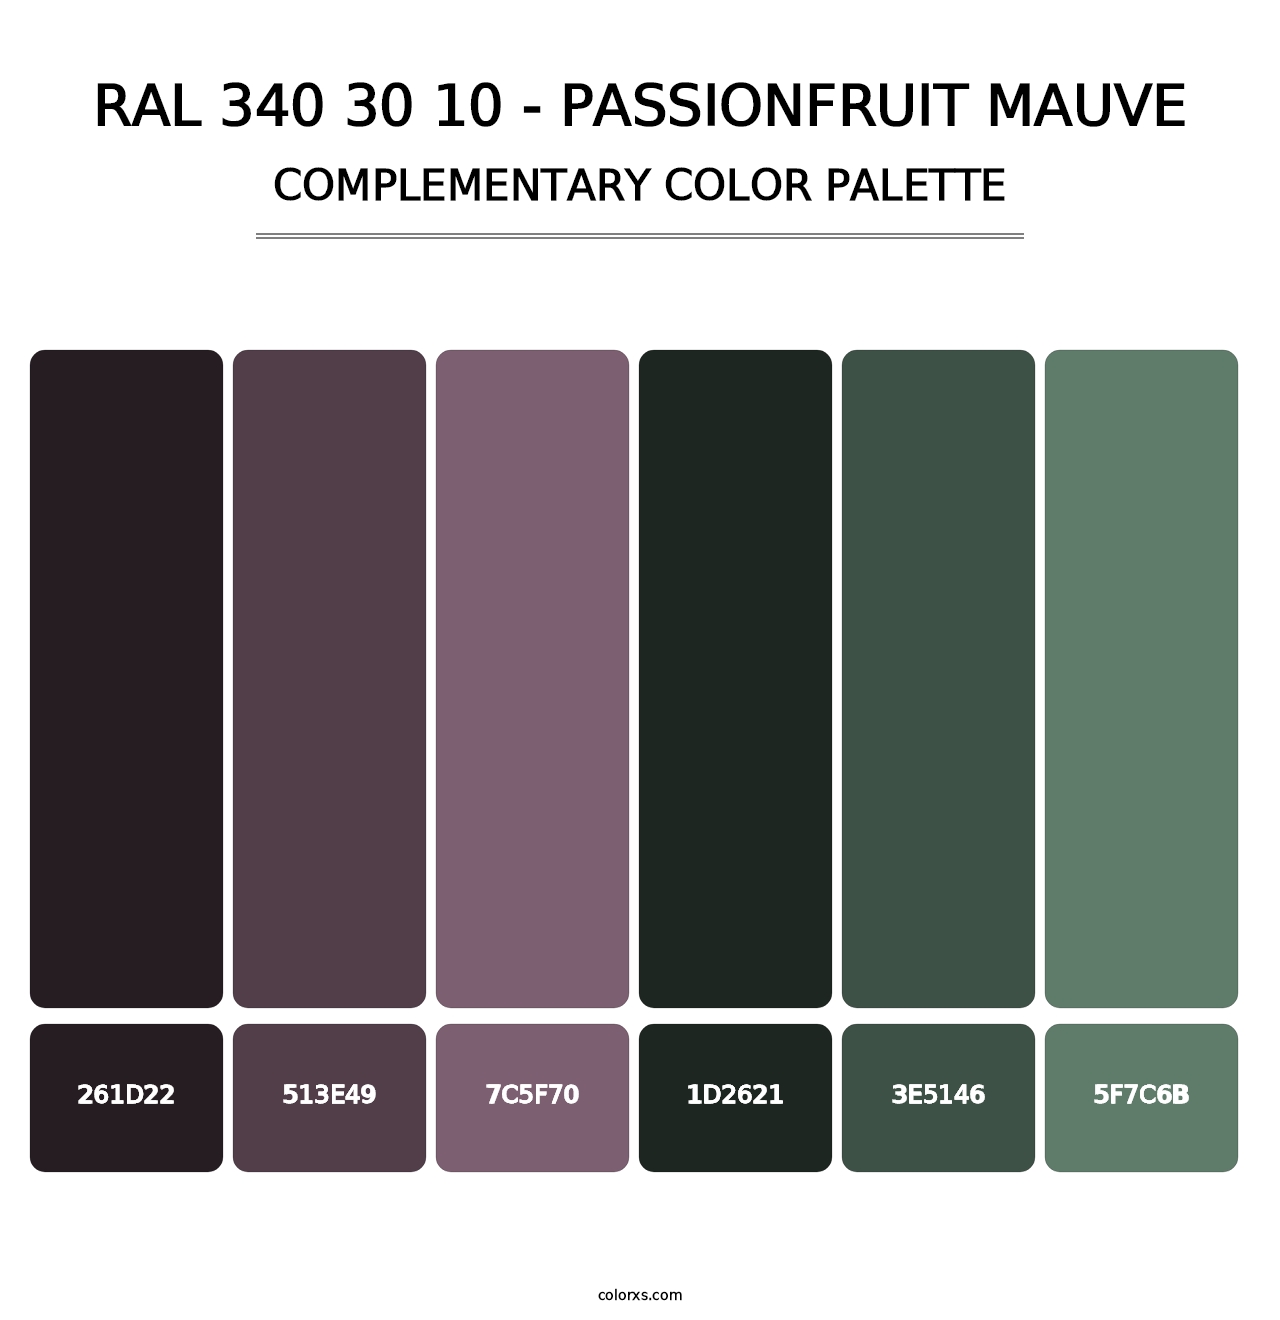 RAL 340 30 10 - Passionfruit Mauve - Complementary Color Palette